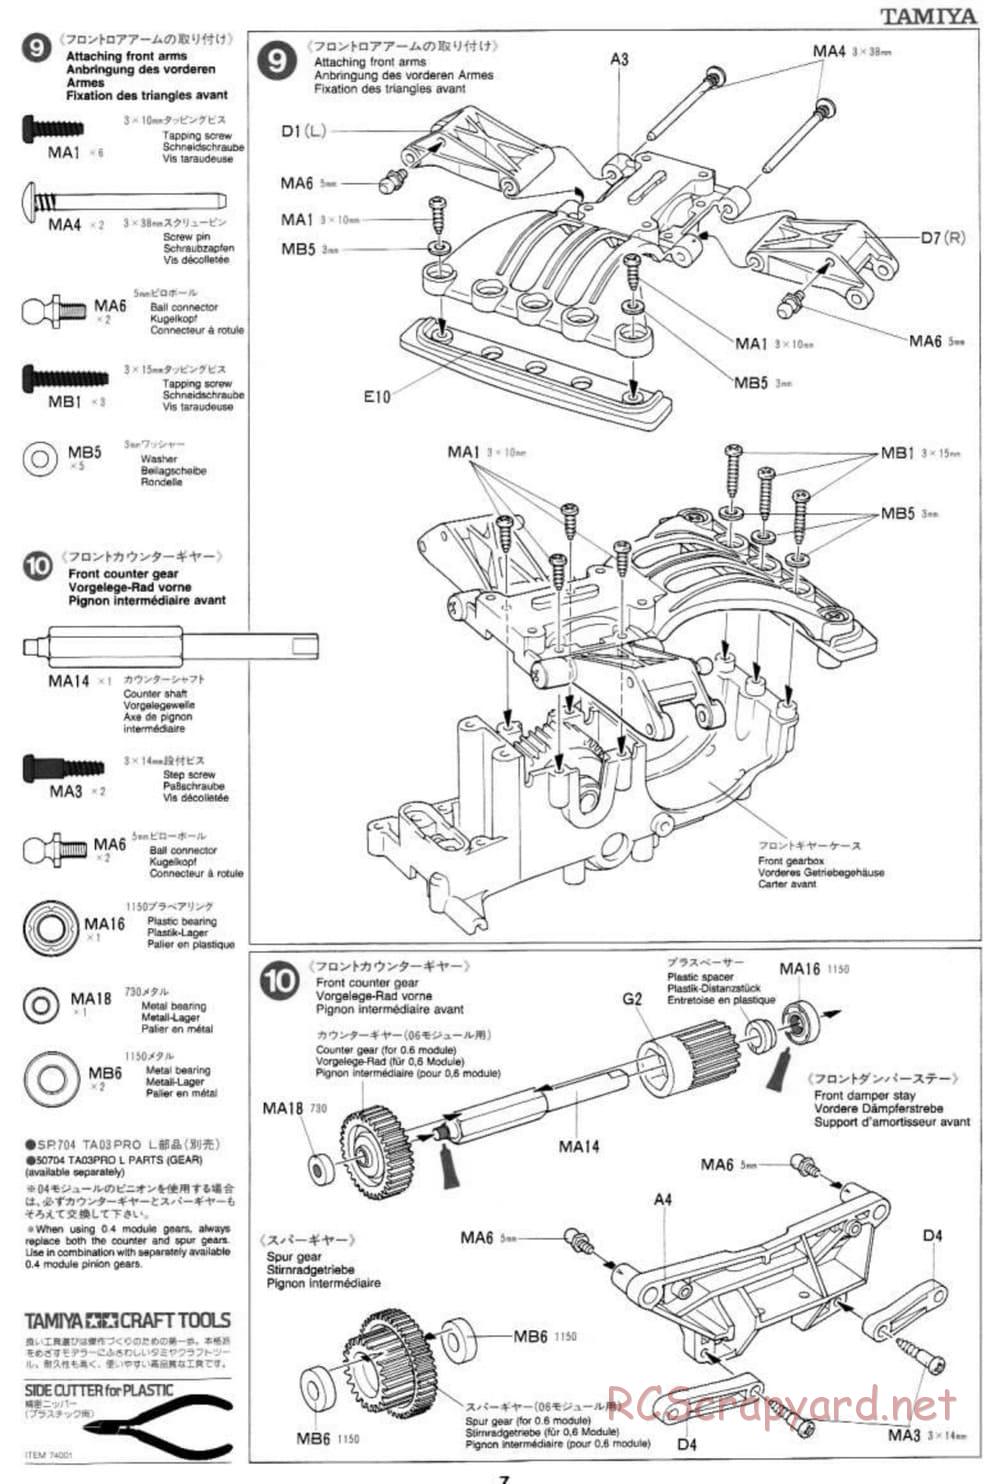 Tamiya - Subaru Impreza WRC 97 - TA-03F Chassis - Manual - Page 7